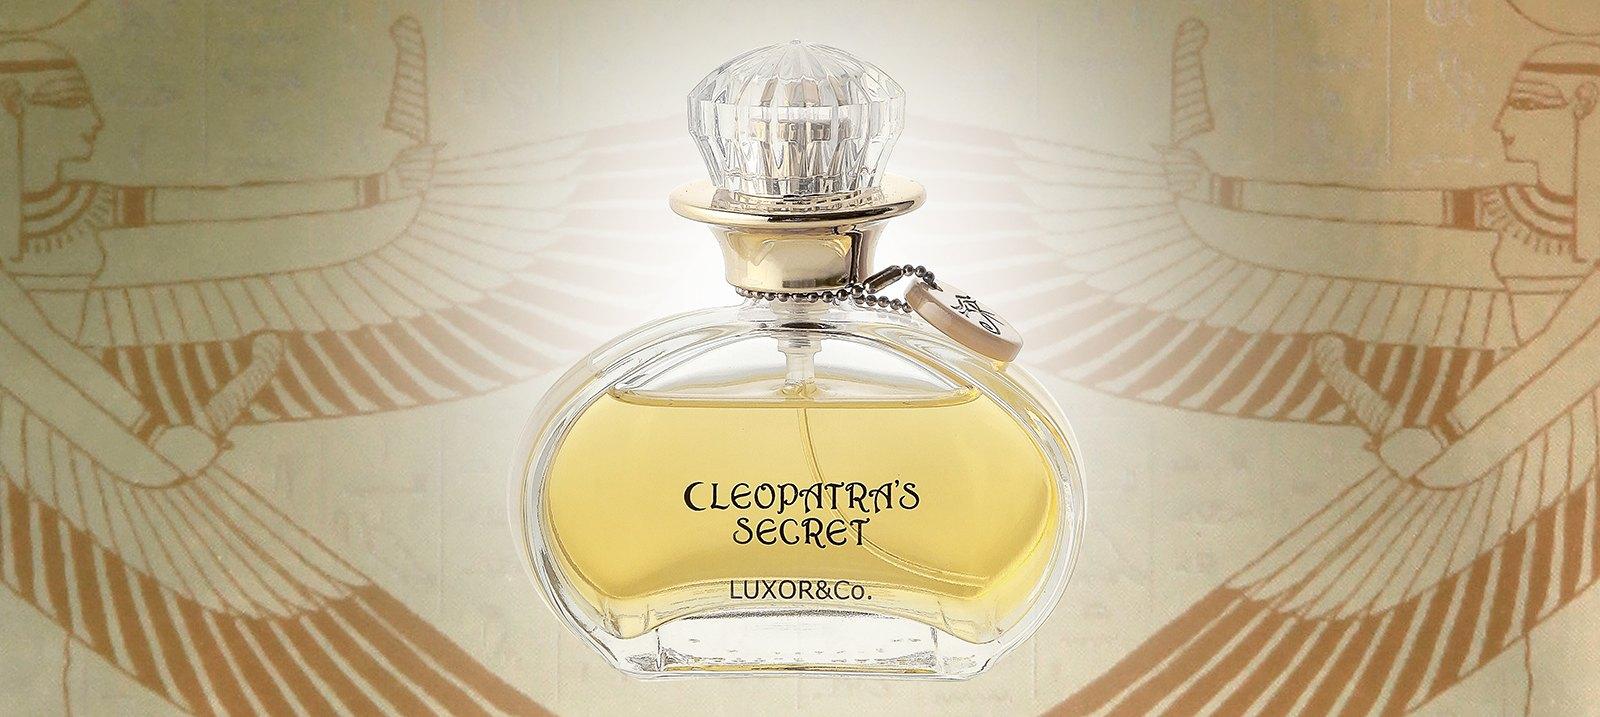 Cleopatra's Secret 